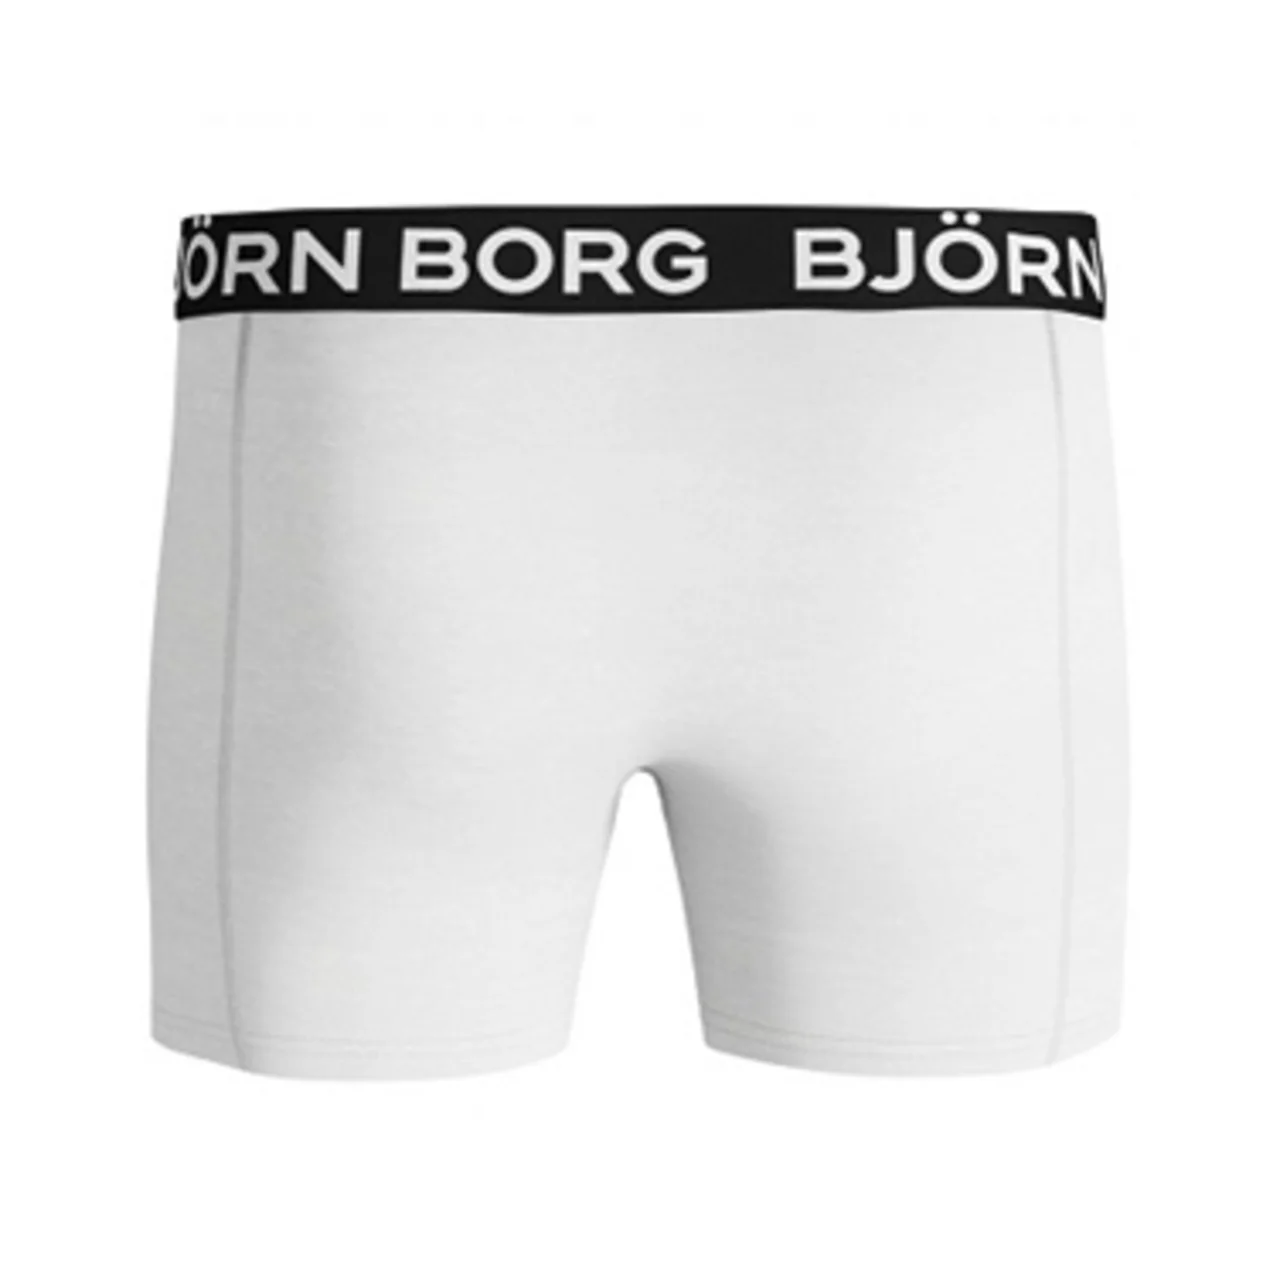 Björn Borg Cotton Stretch Shorts White/Black